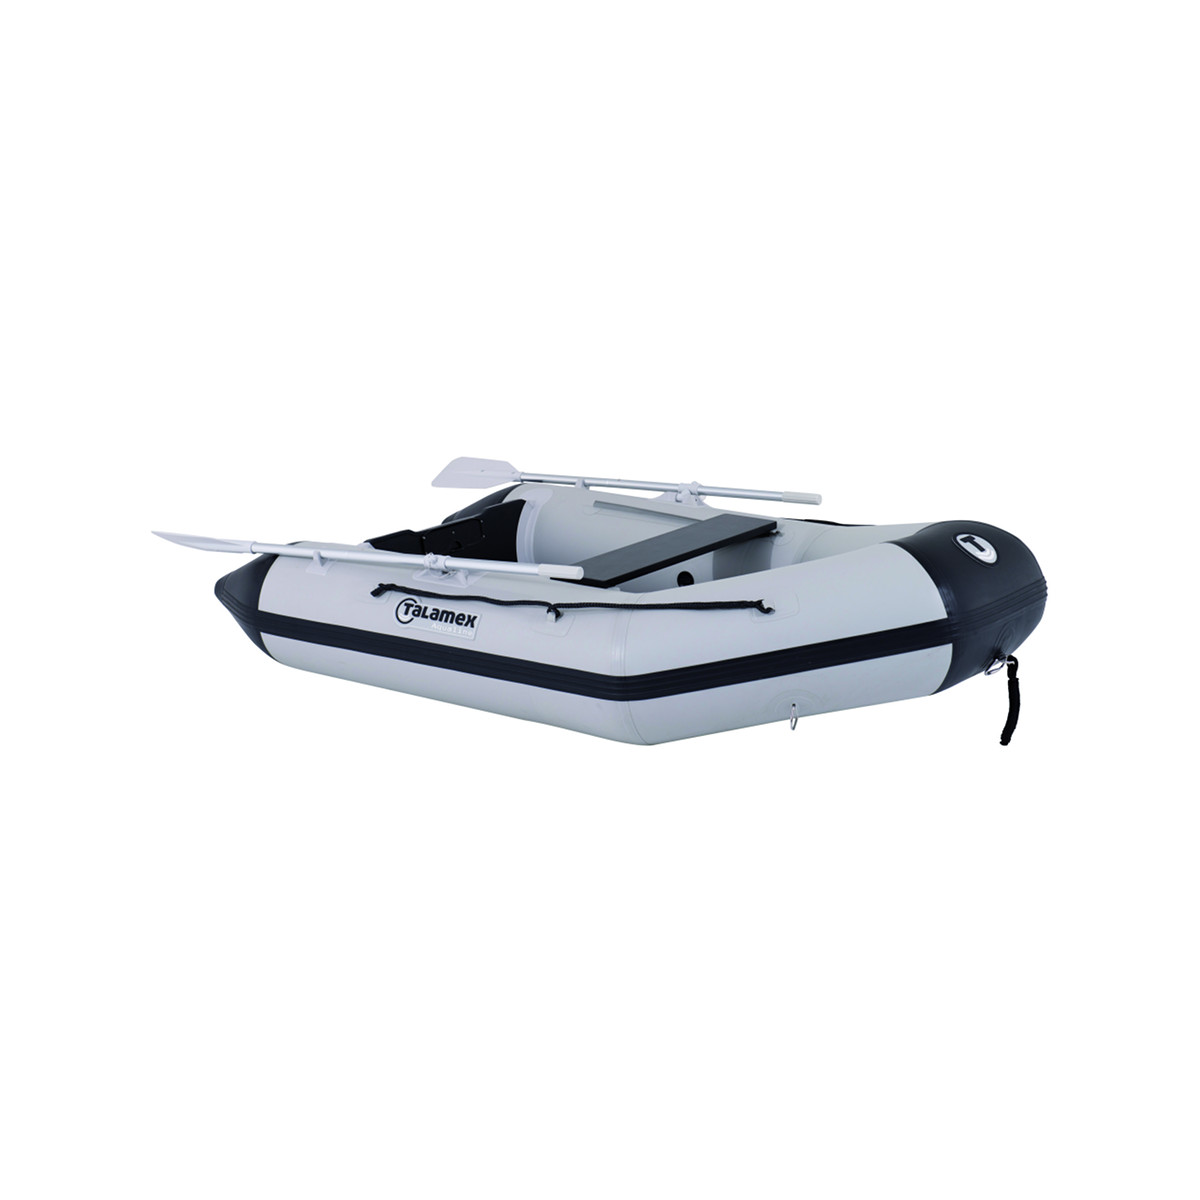 DEAL: Talamex Aqualine QLS230 opblaasbare rubberboot met lattenbodem, lengte 2,30m, grijs